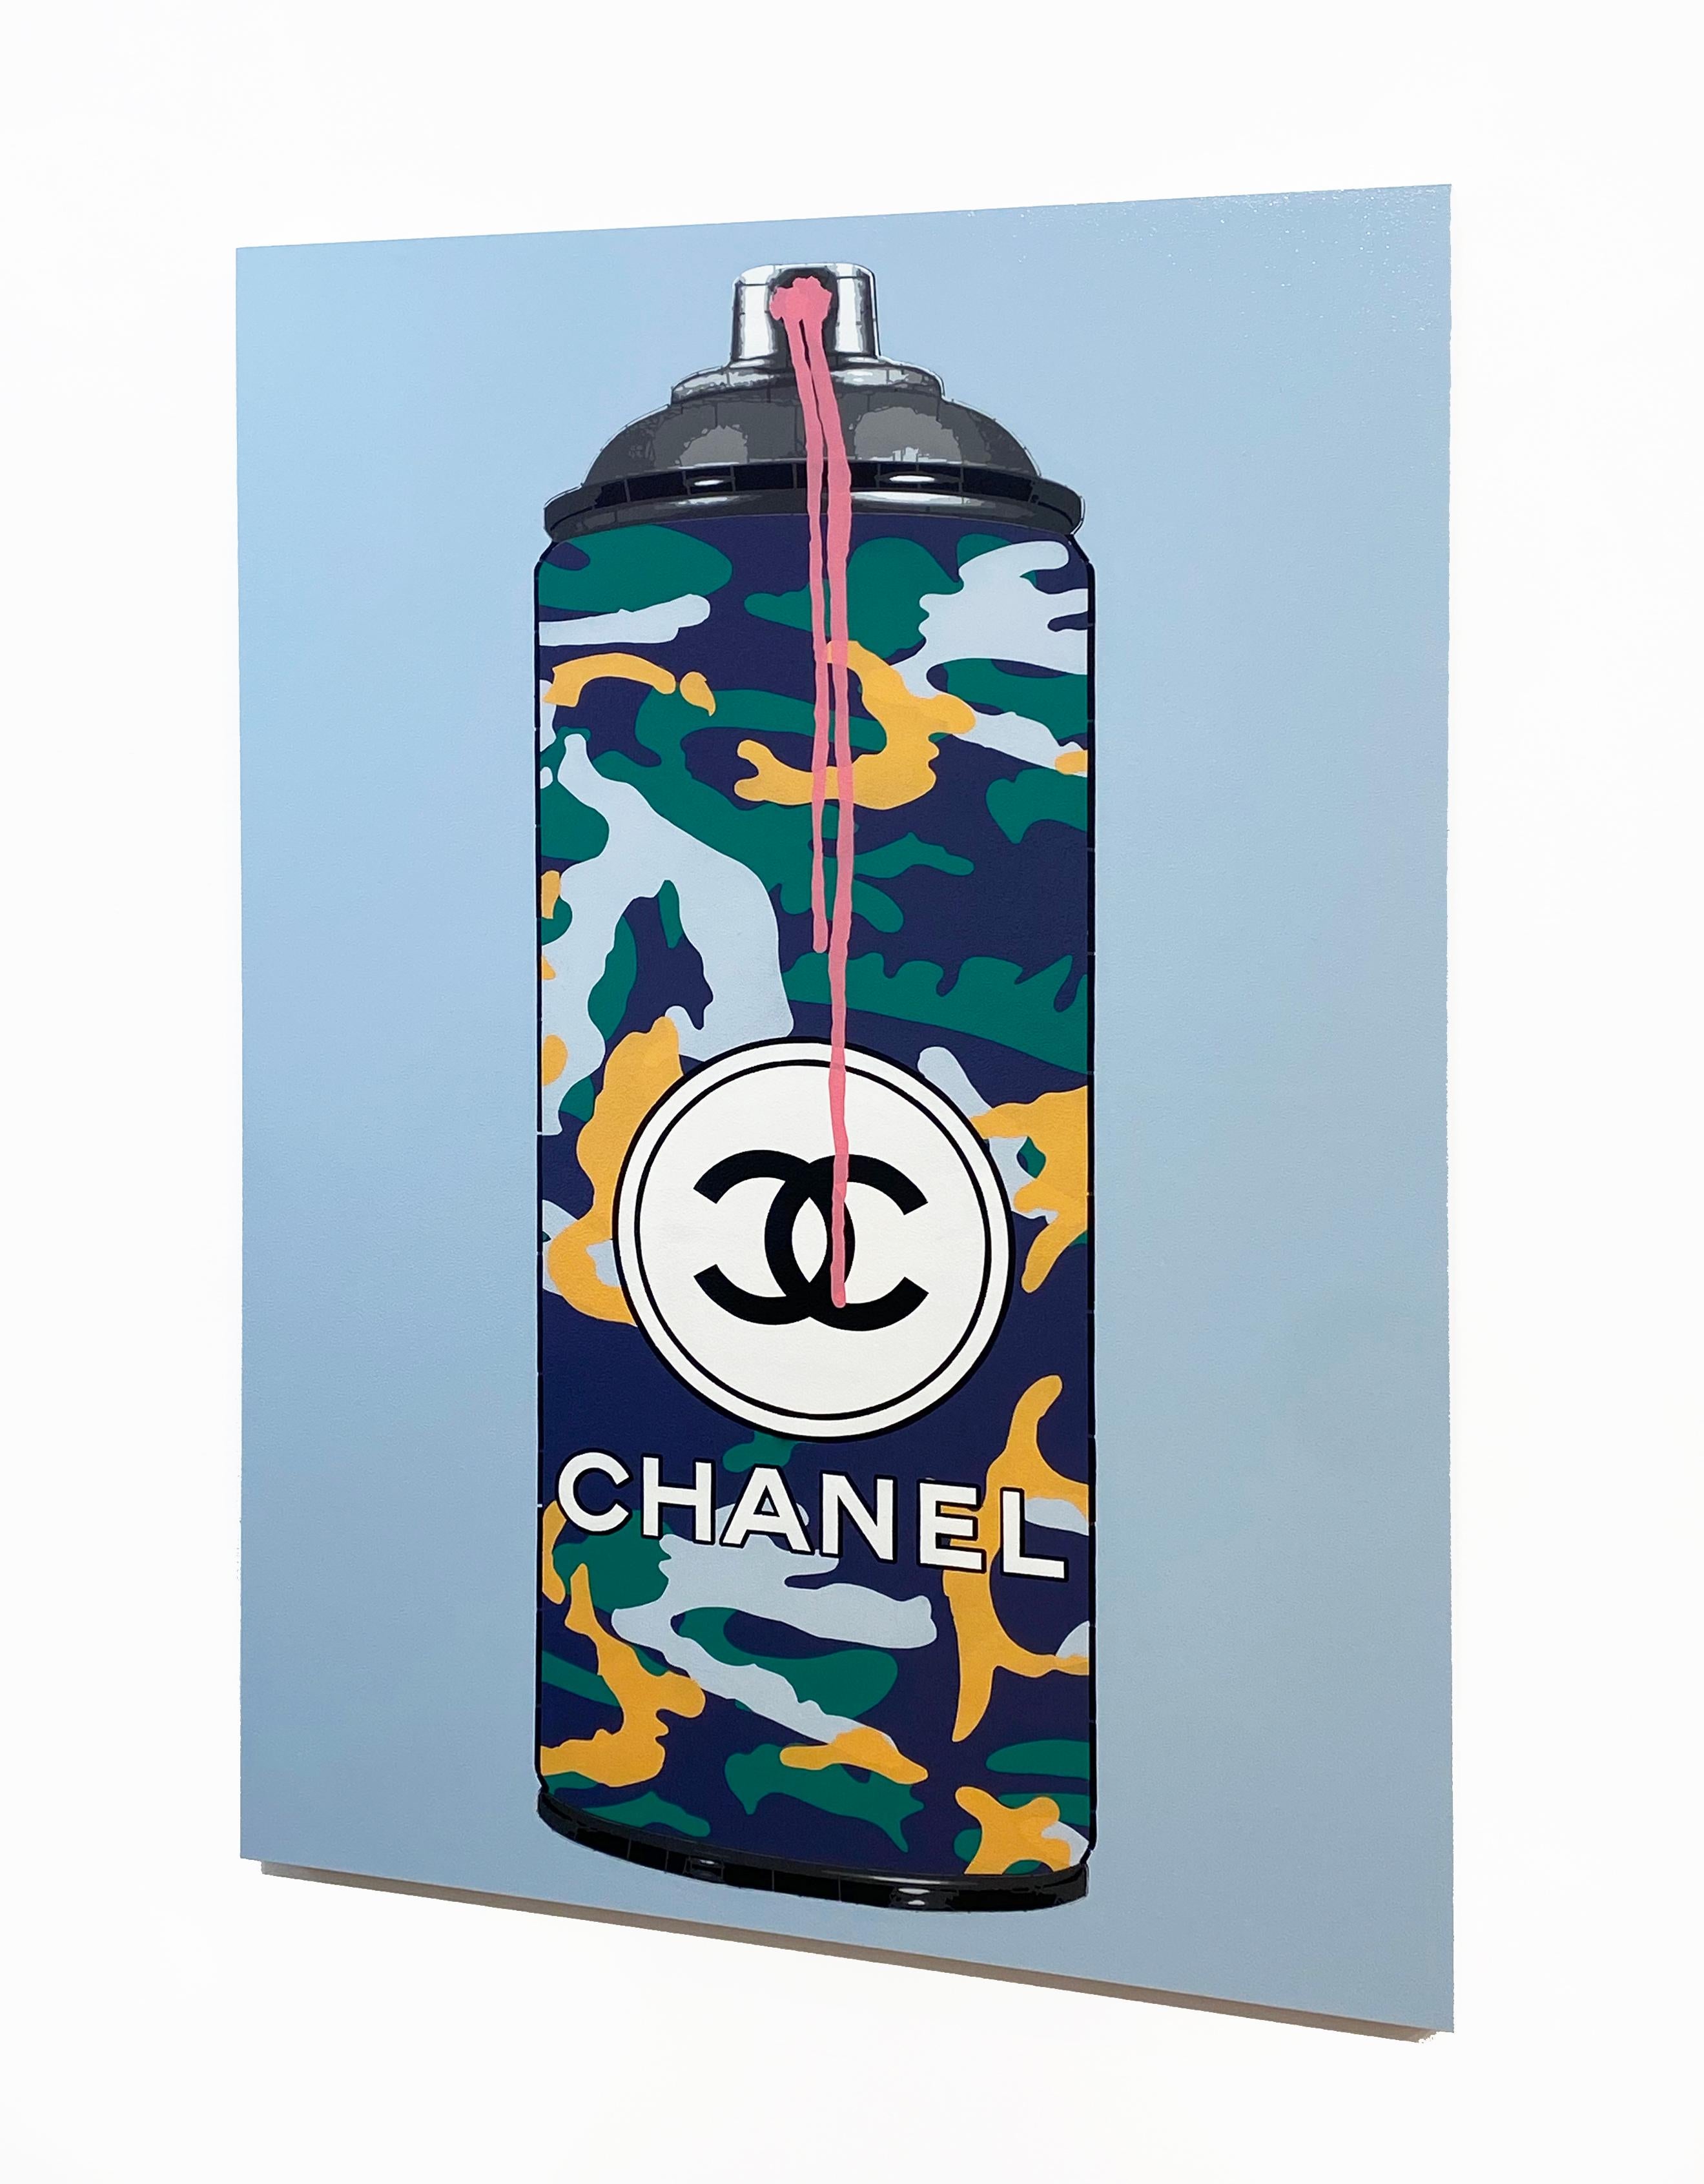 Artist:  La Pun, Campbell
Title:  Chanel Night
Series:  Chanel
Date:  2018
Medium:  Aerosol on panel
Unframed Dimensions:  40.5